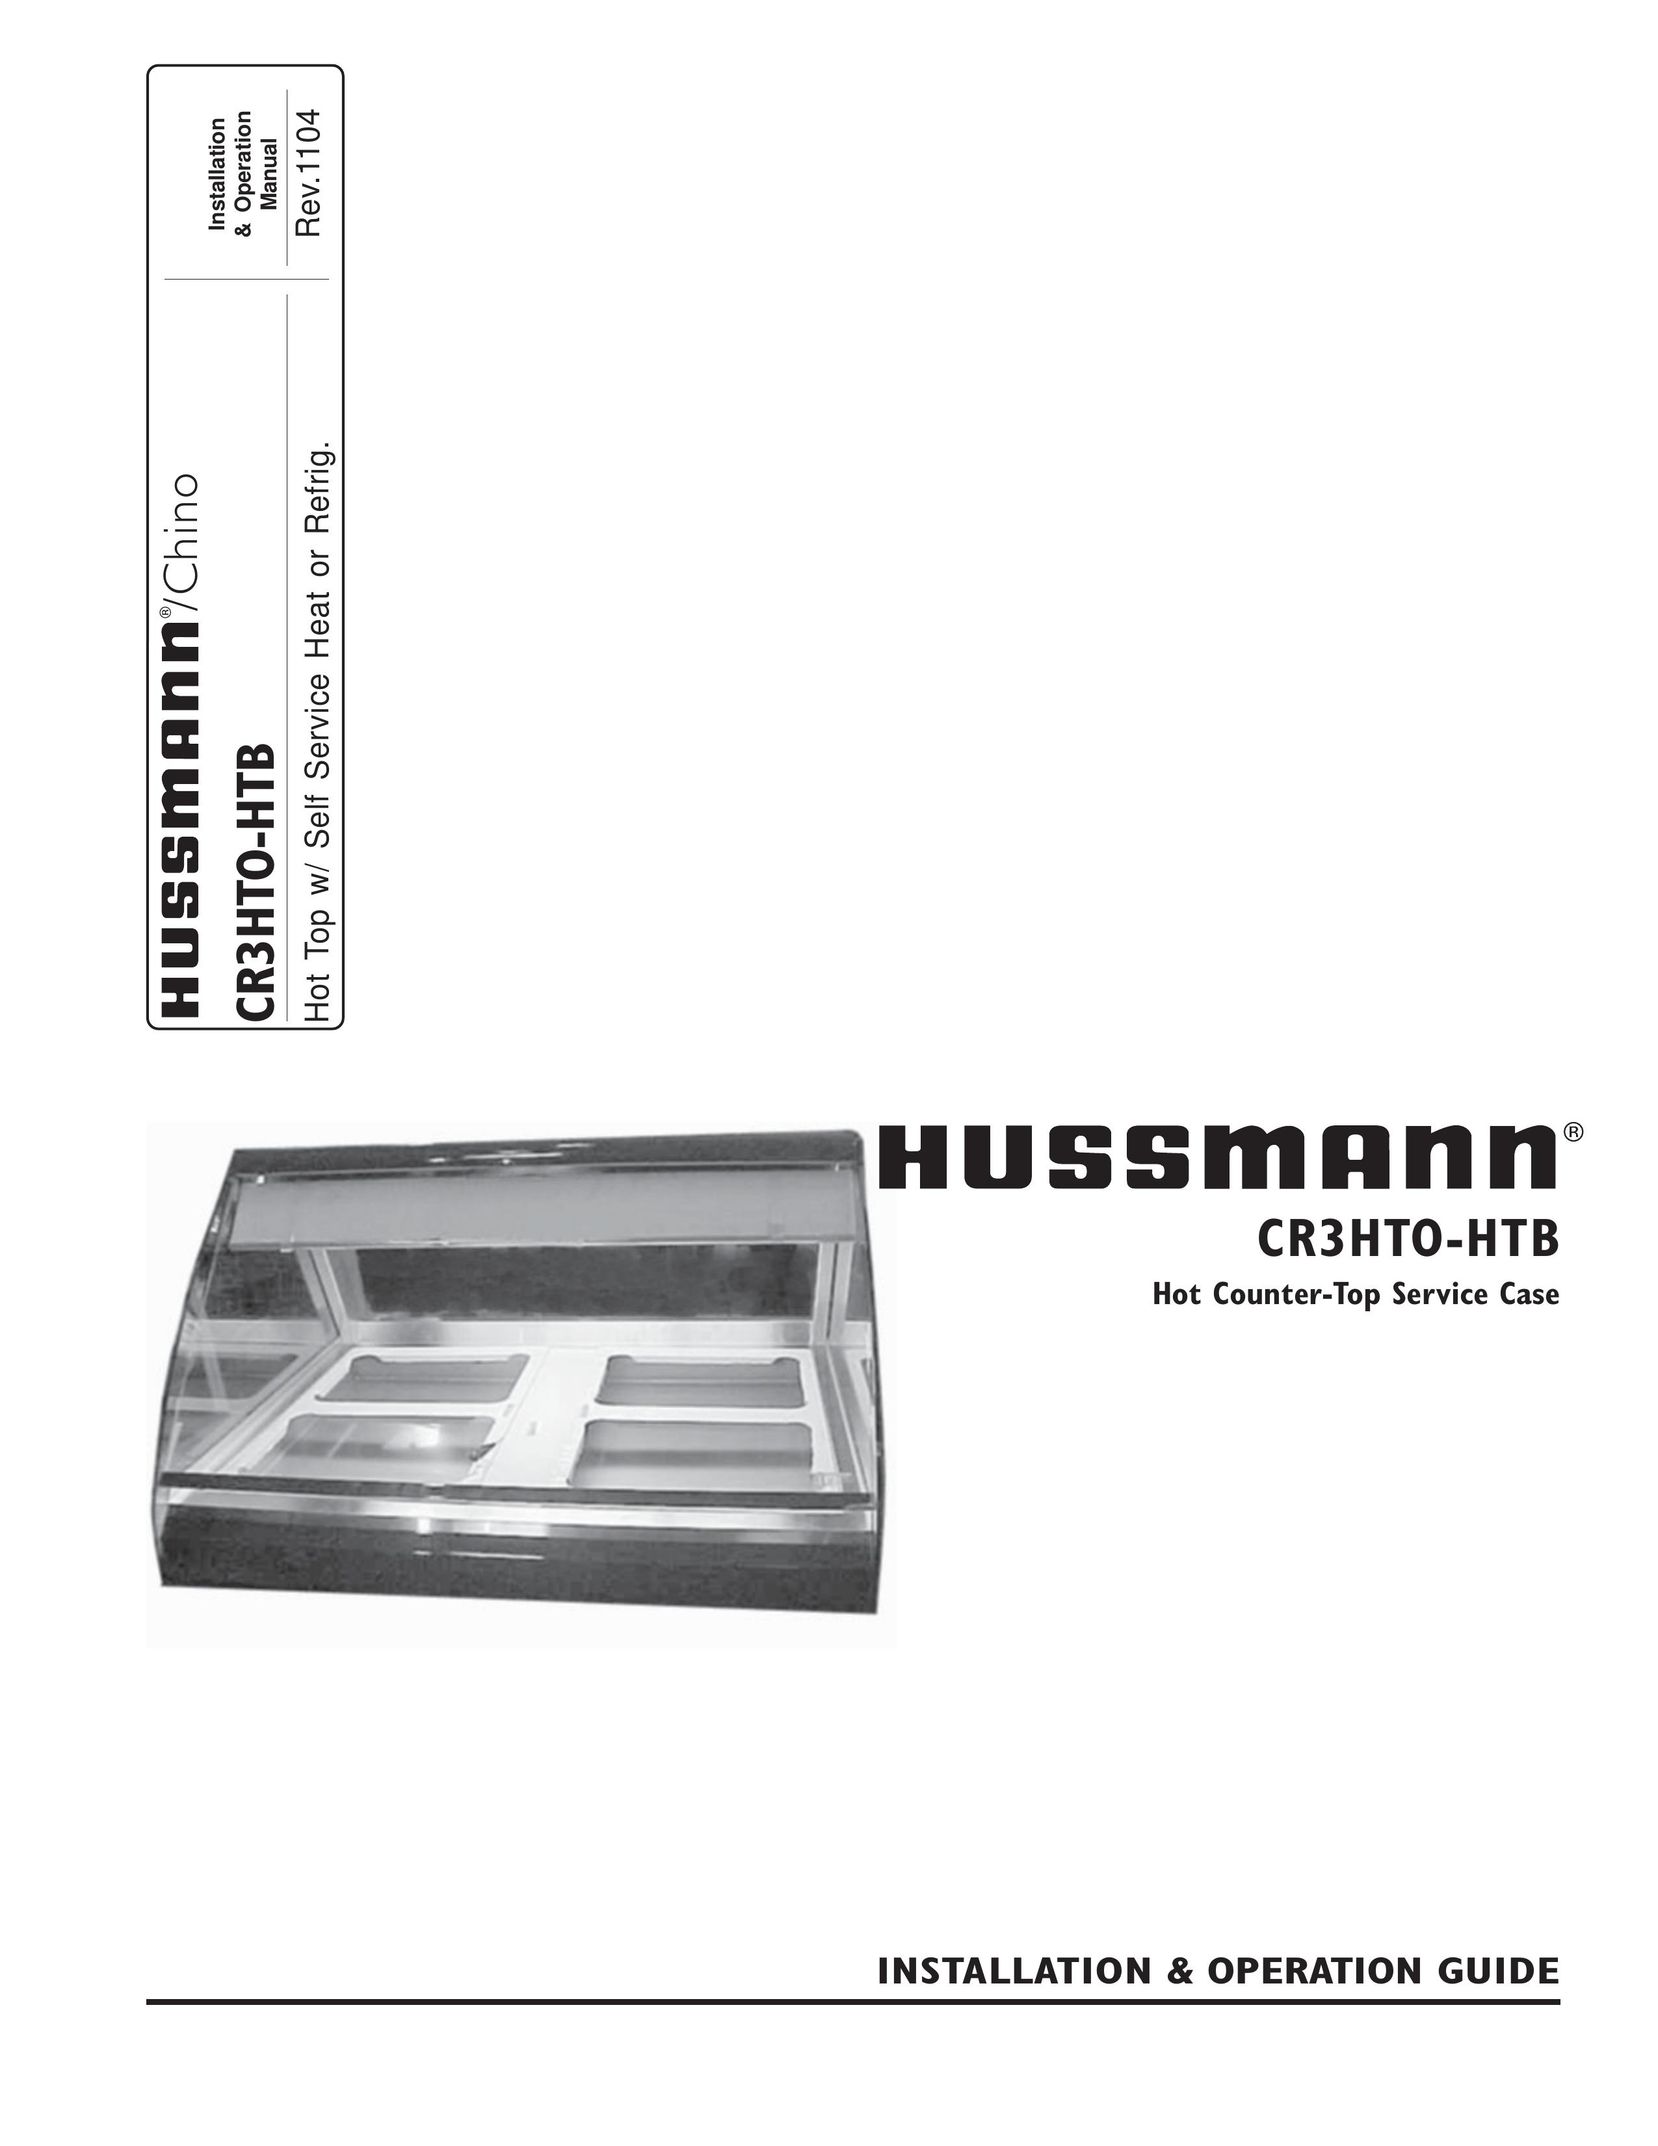 hussman CR3HTO-HTB Freezer User Manual